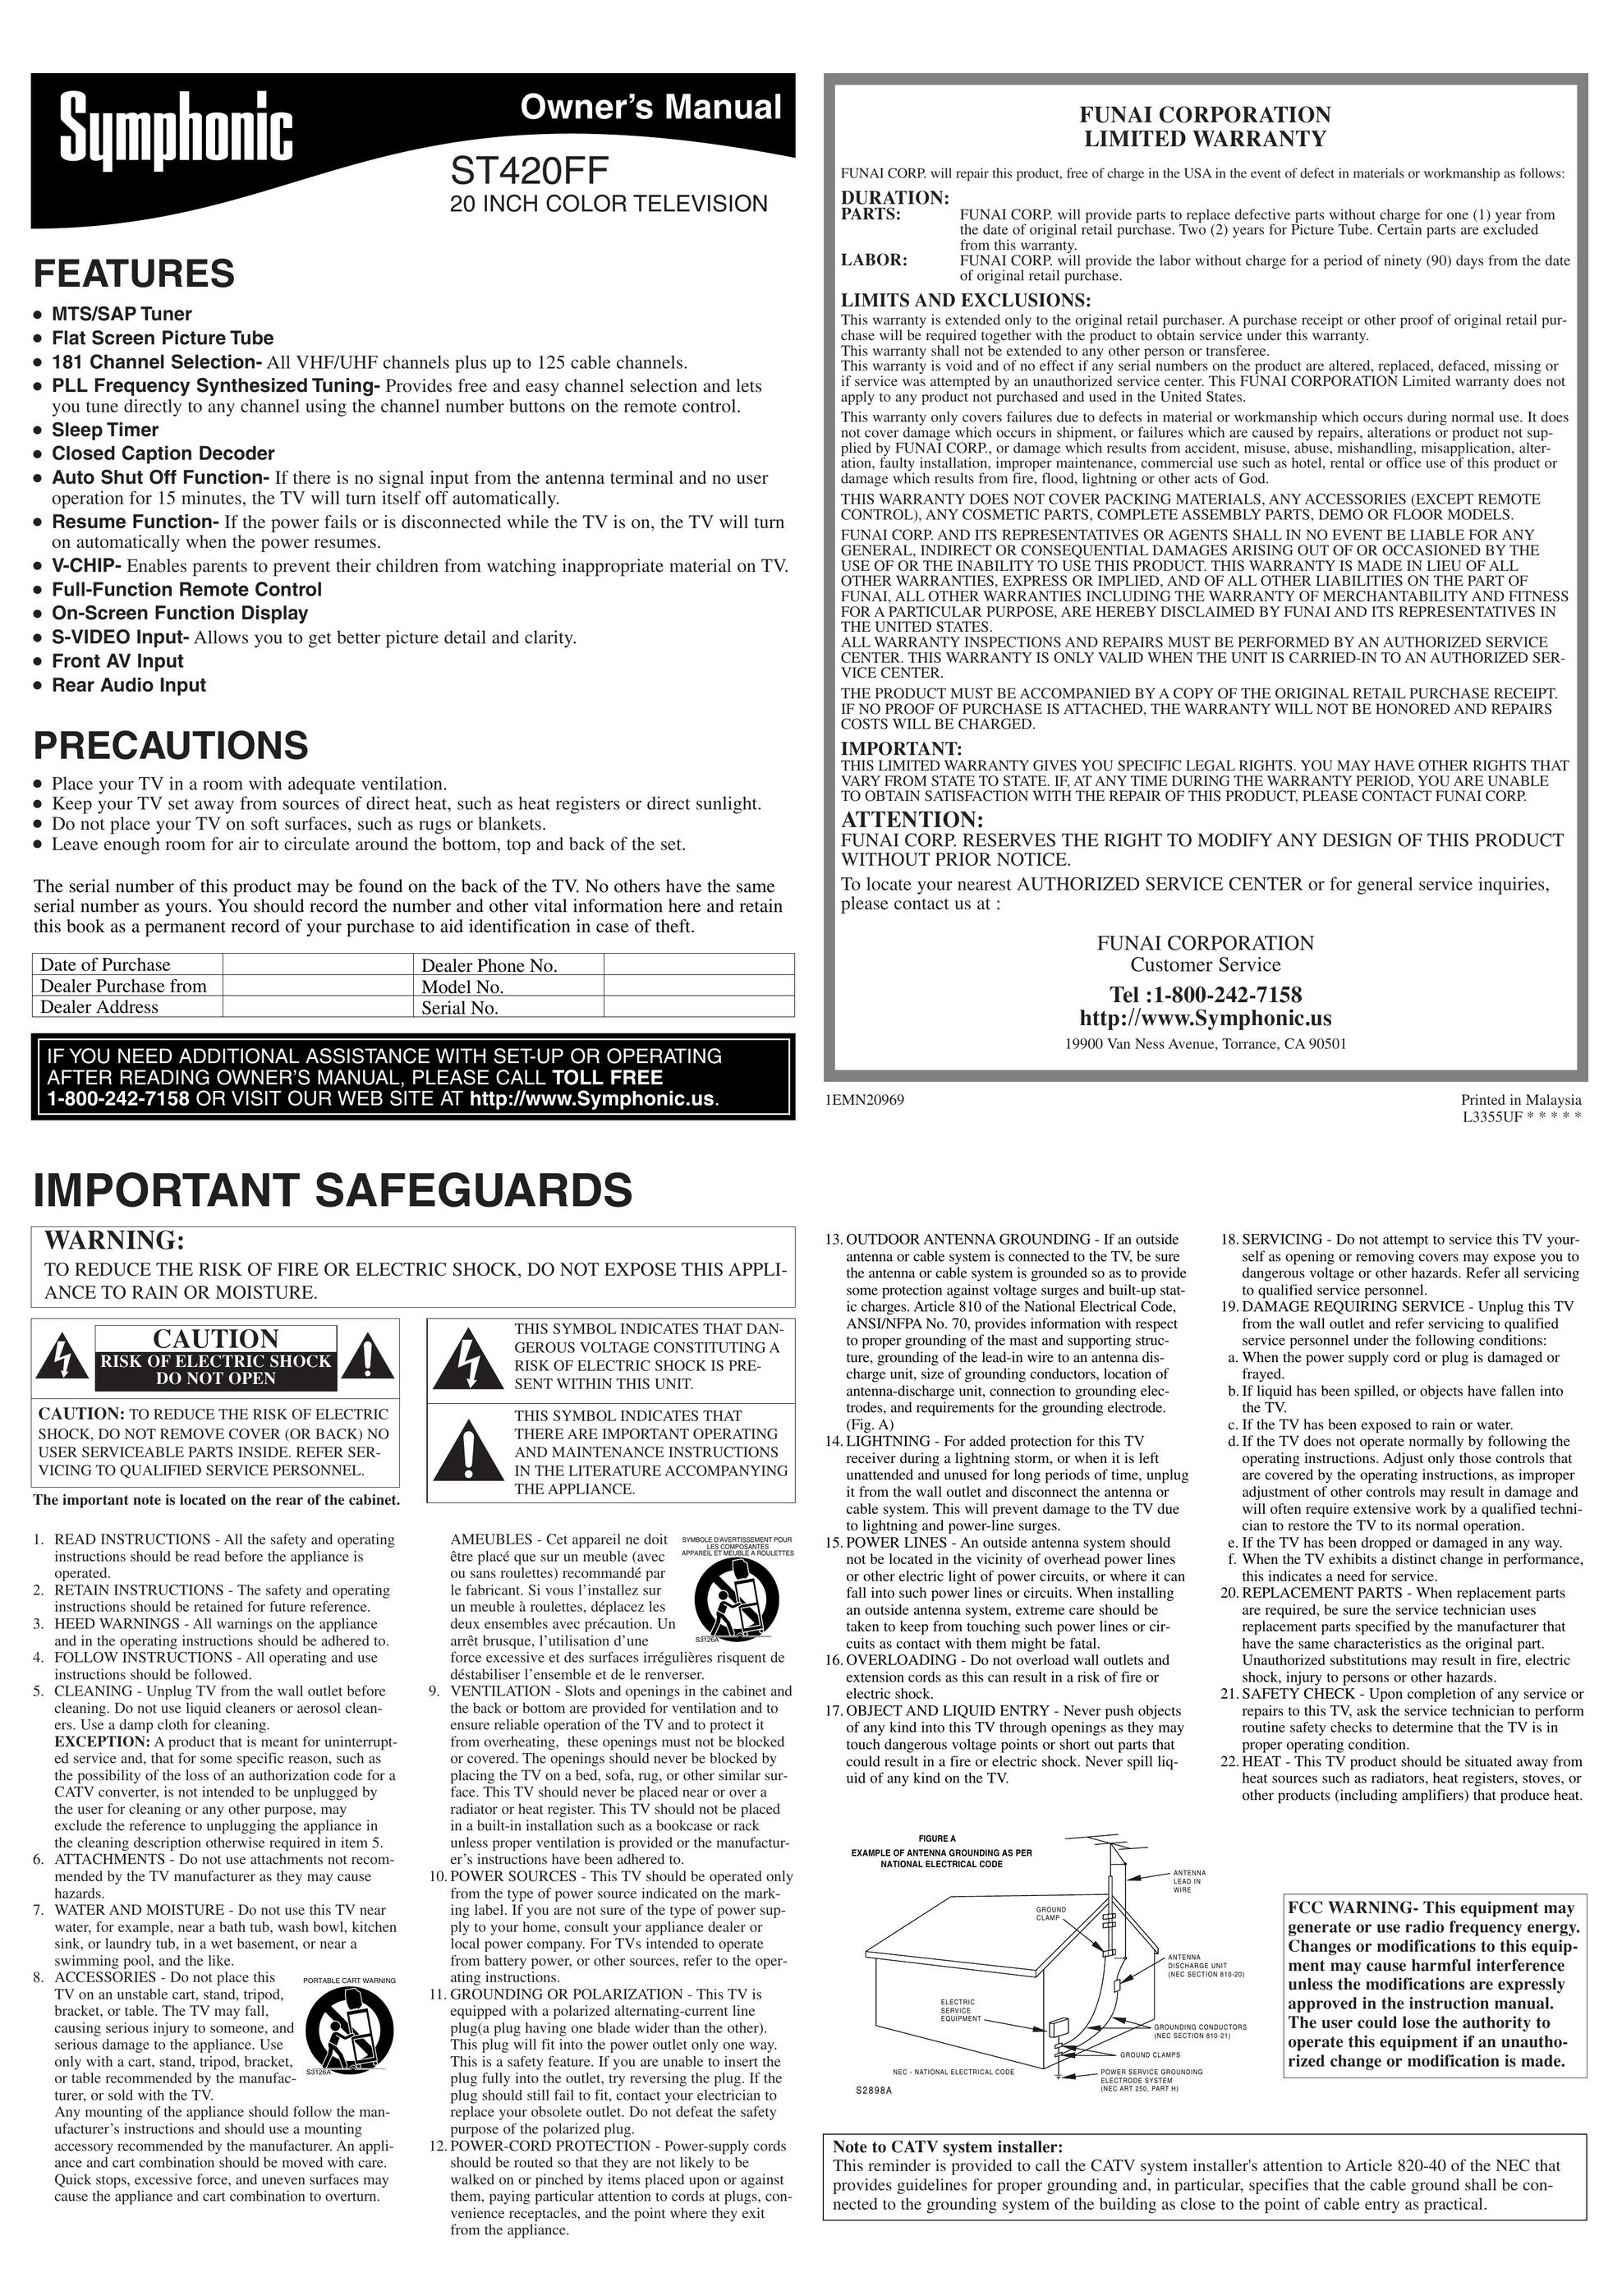 Symphonic ST420FF CRT Television User Manual